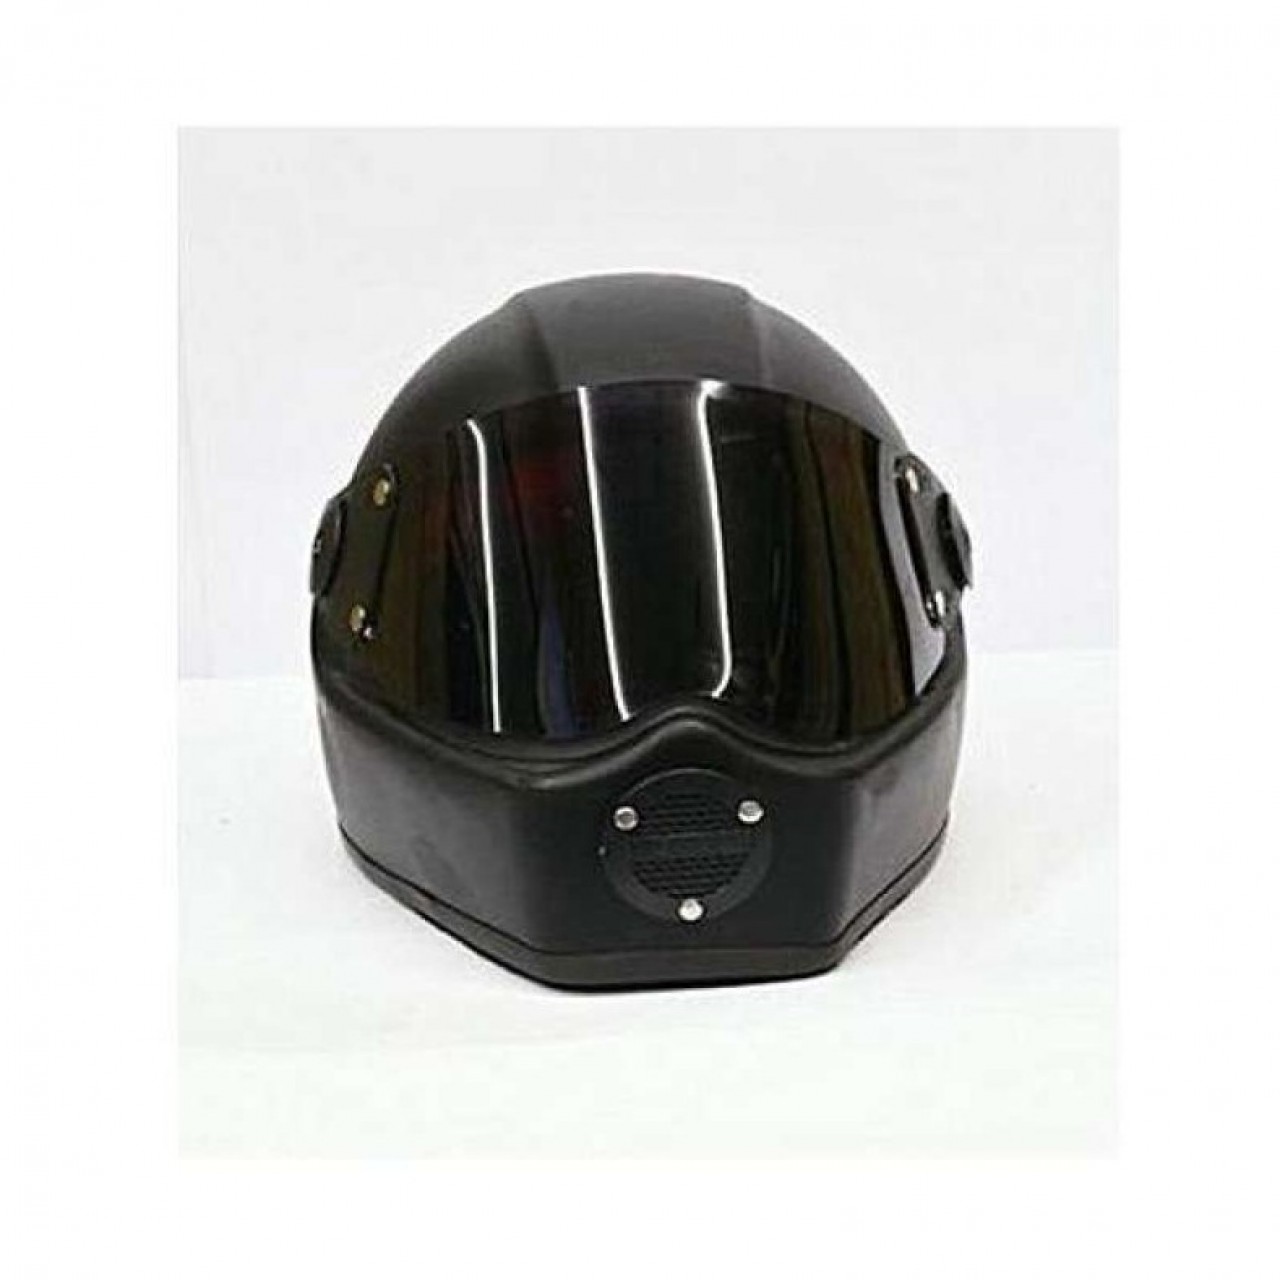 Motor Bike Helmet - Medium Size - Black